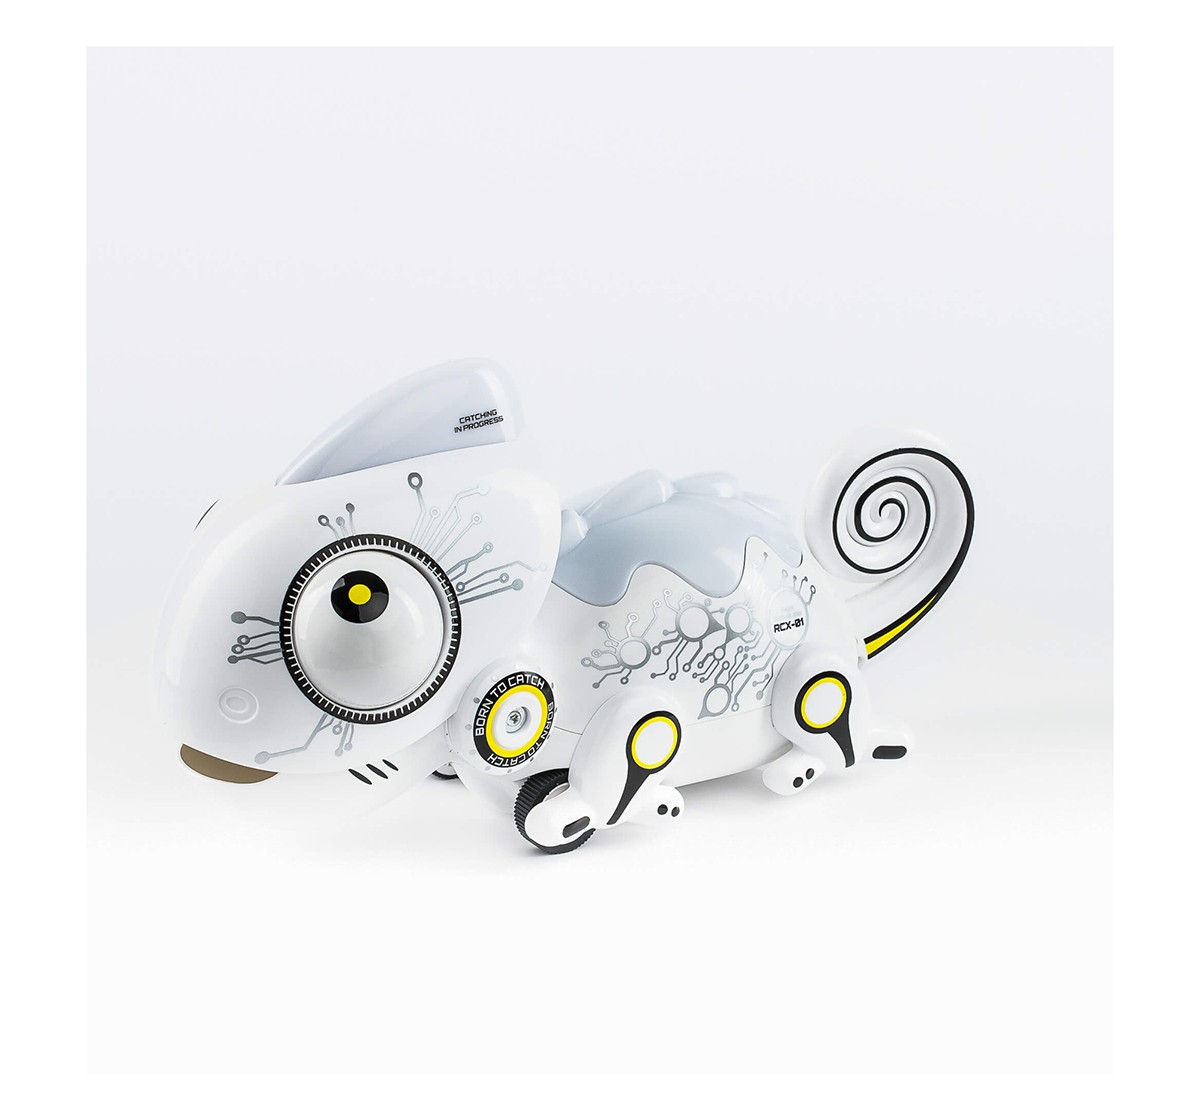 Silverlit Robo Chameleon White Robotics for Kids age 3Y+ (White)